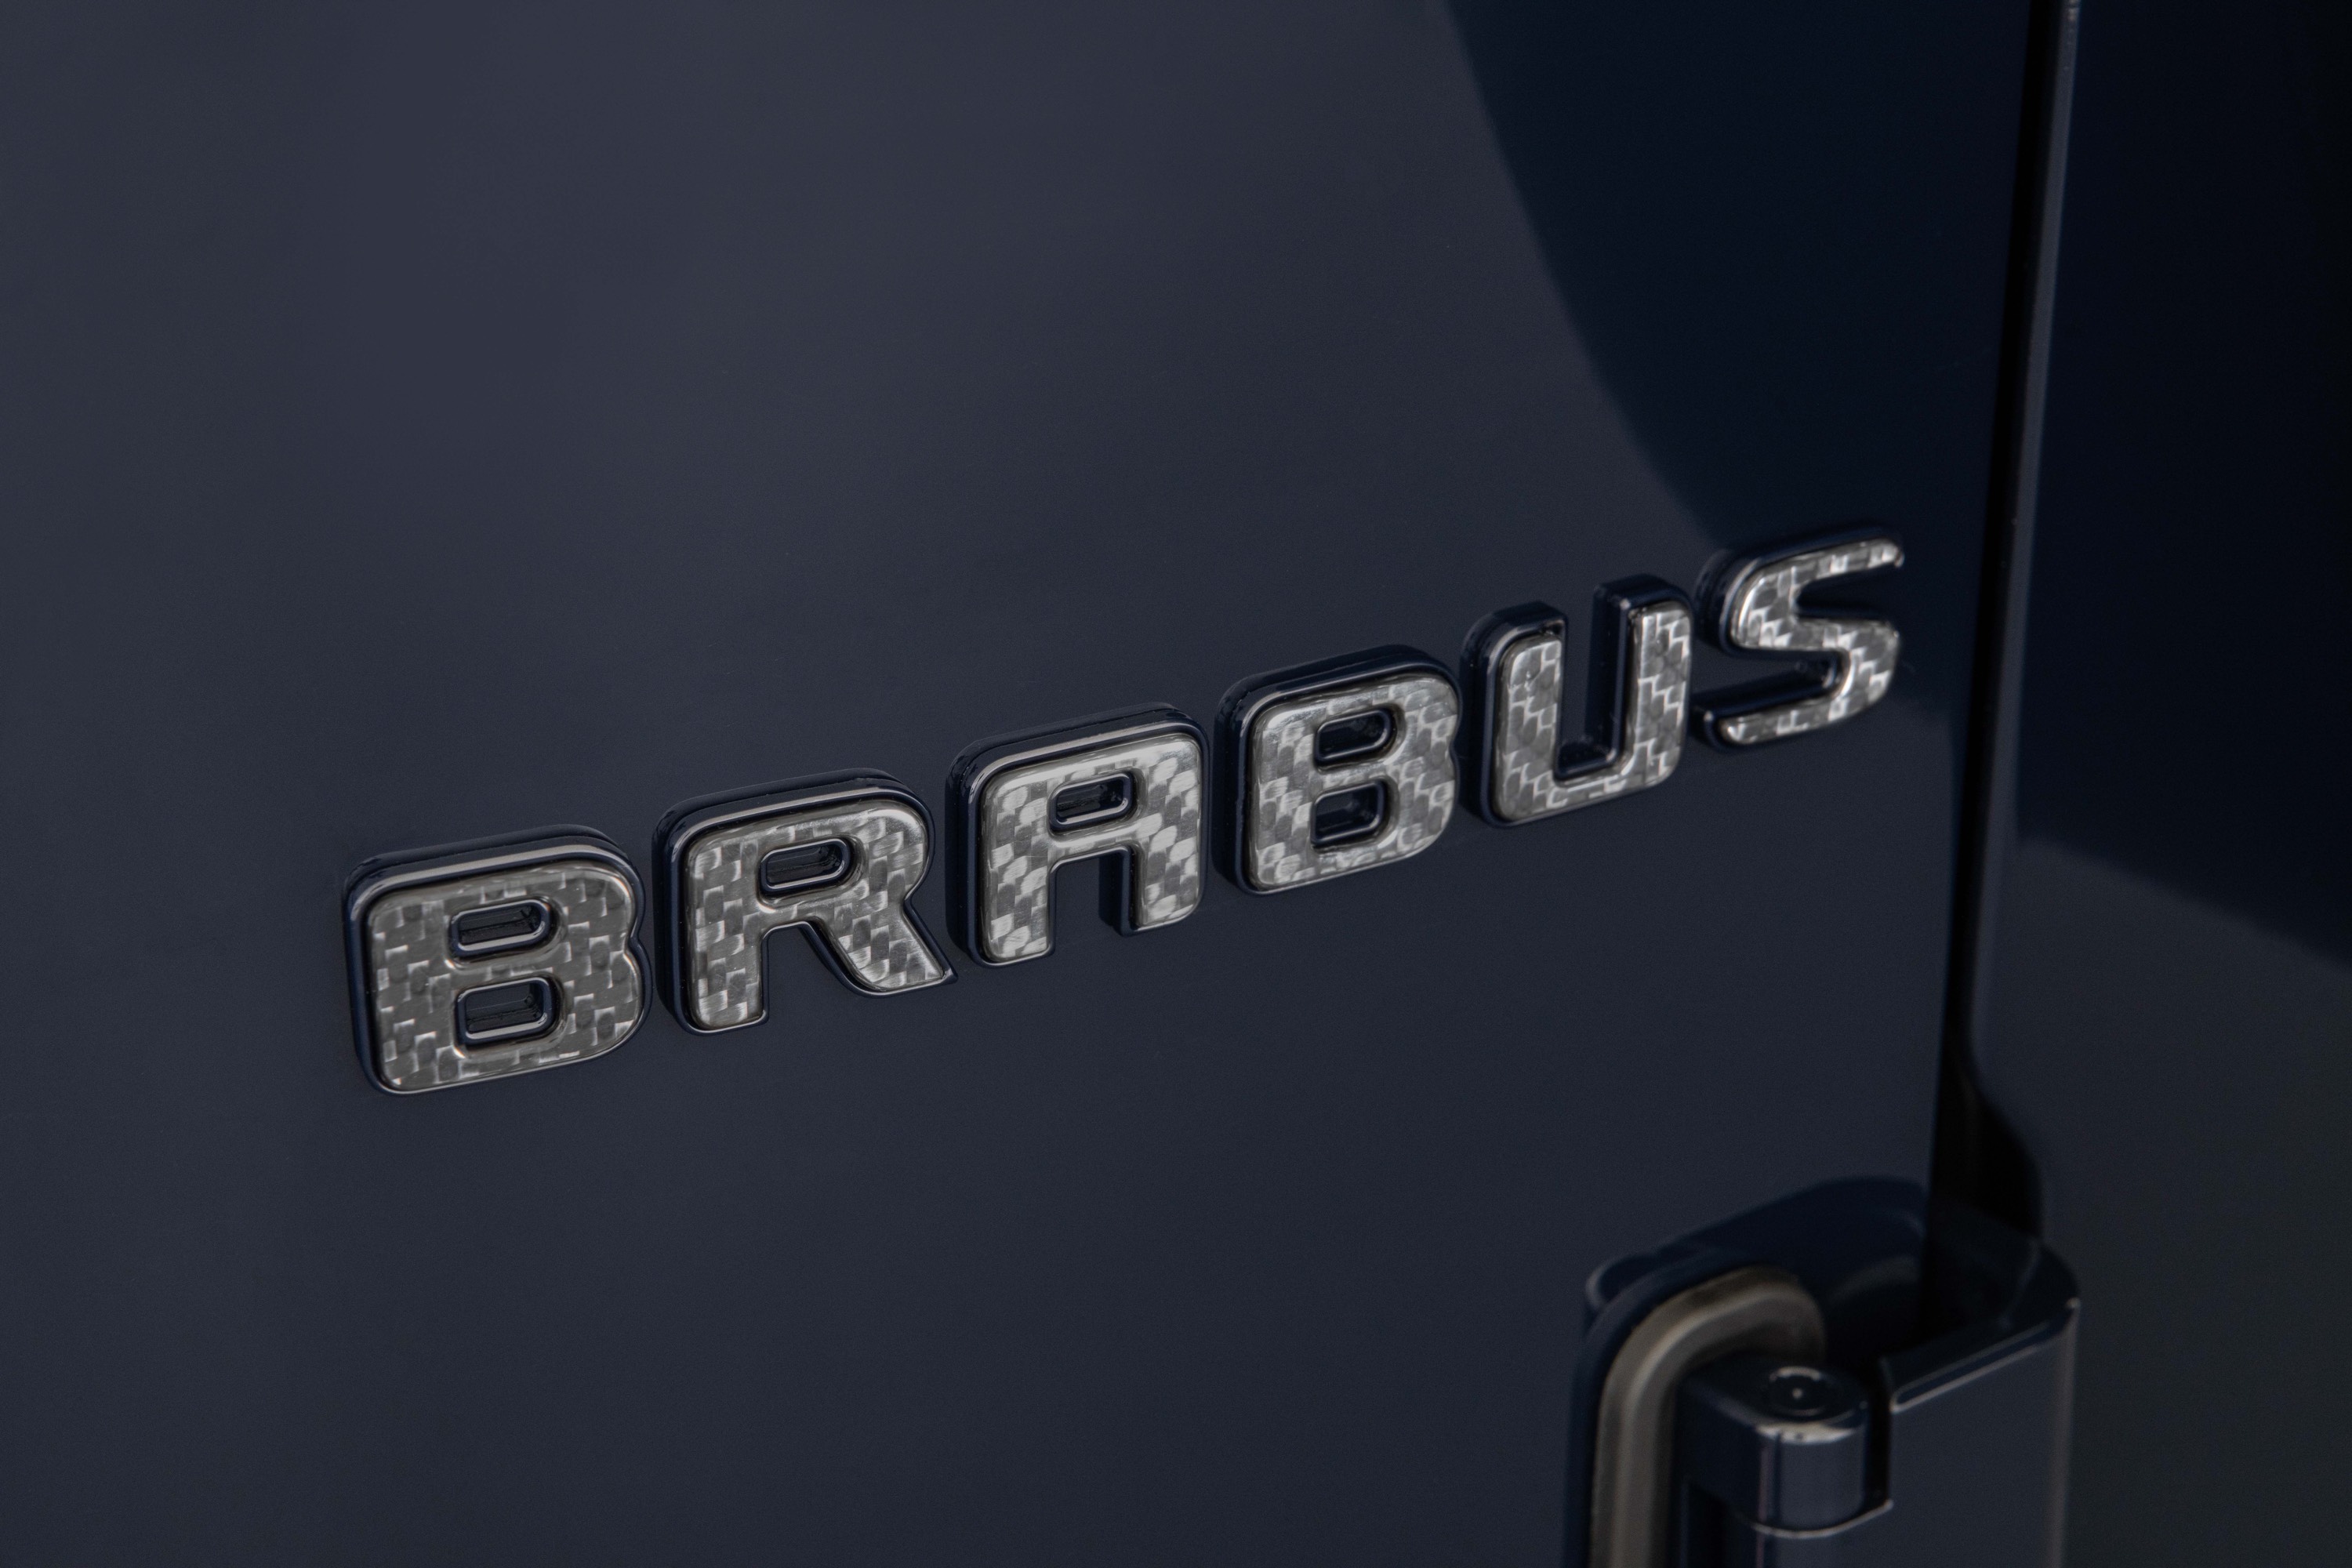 BRABUS 900 DEEP BLUE Mercedes-AMG G63